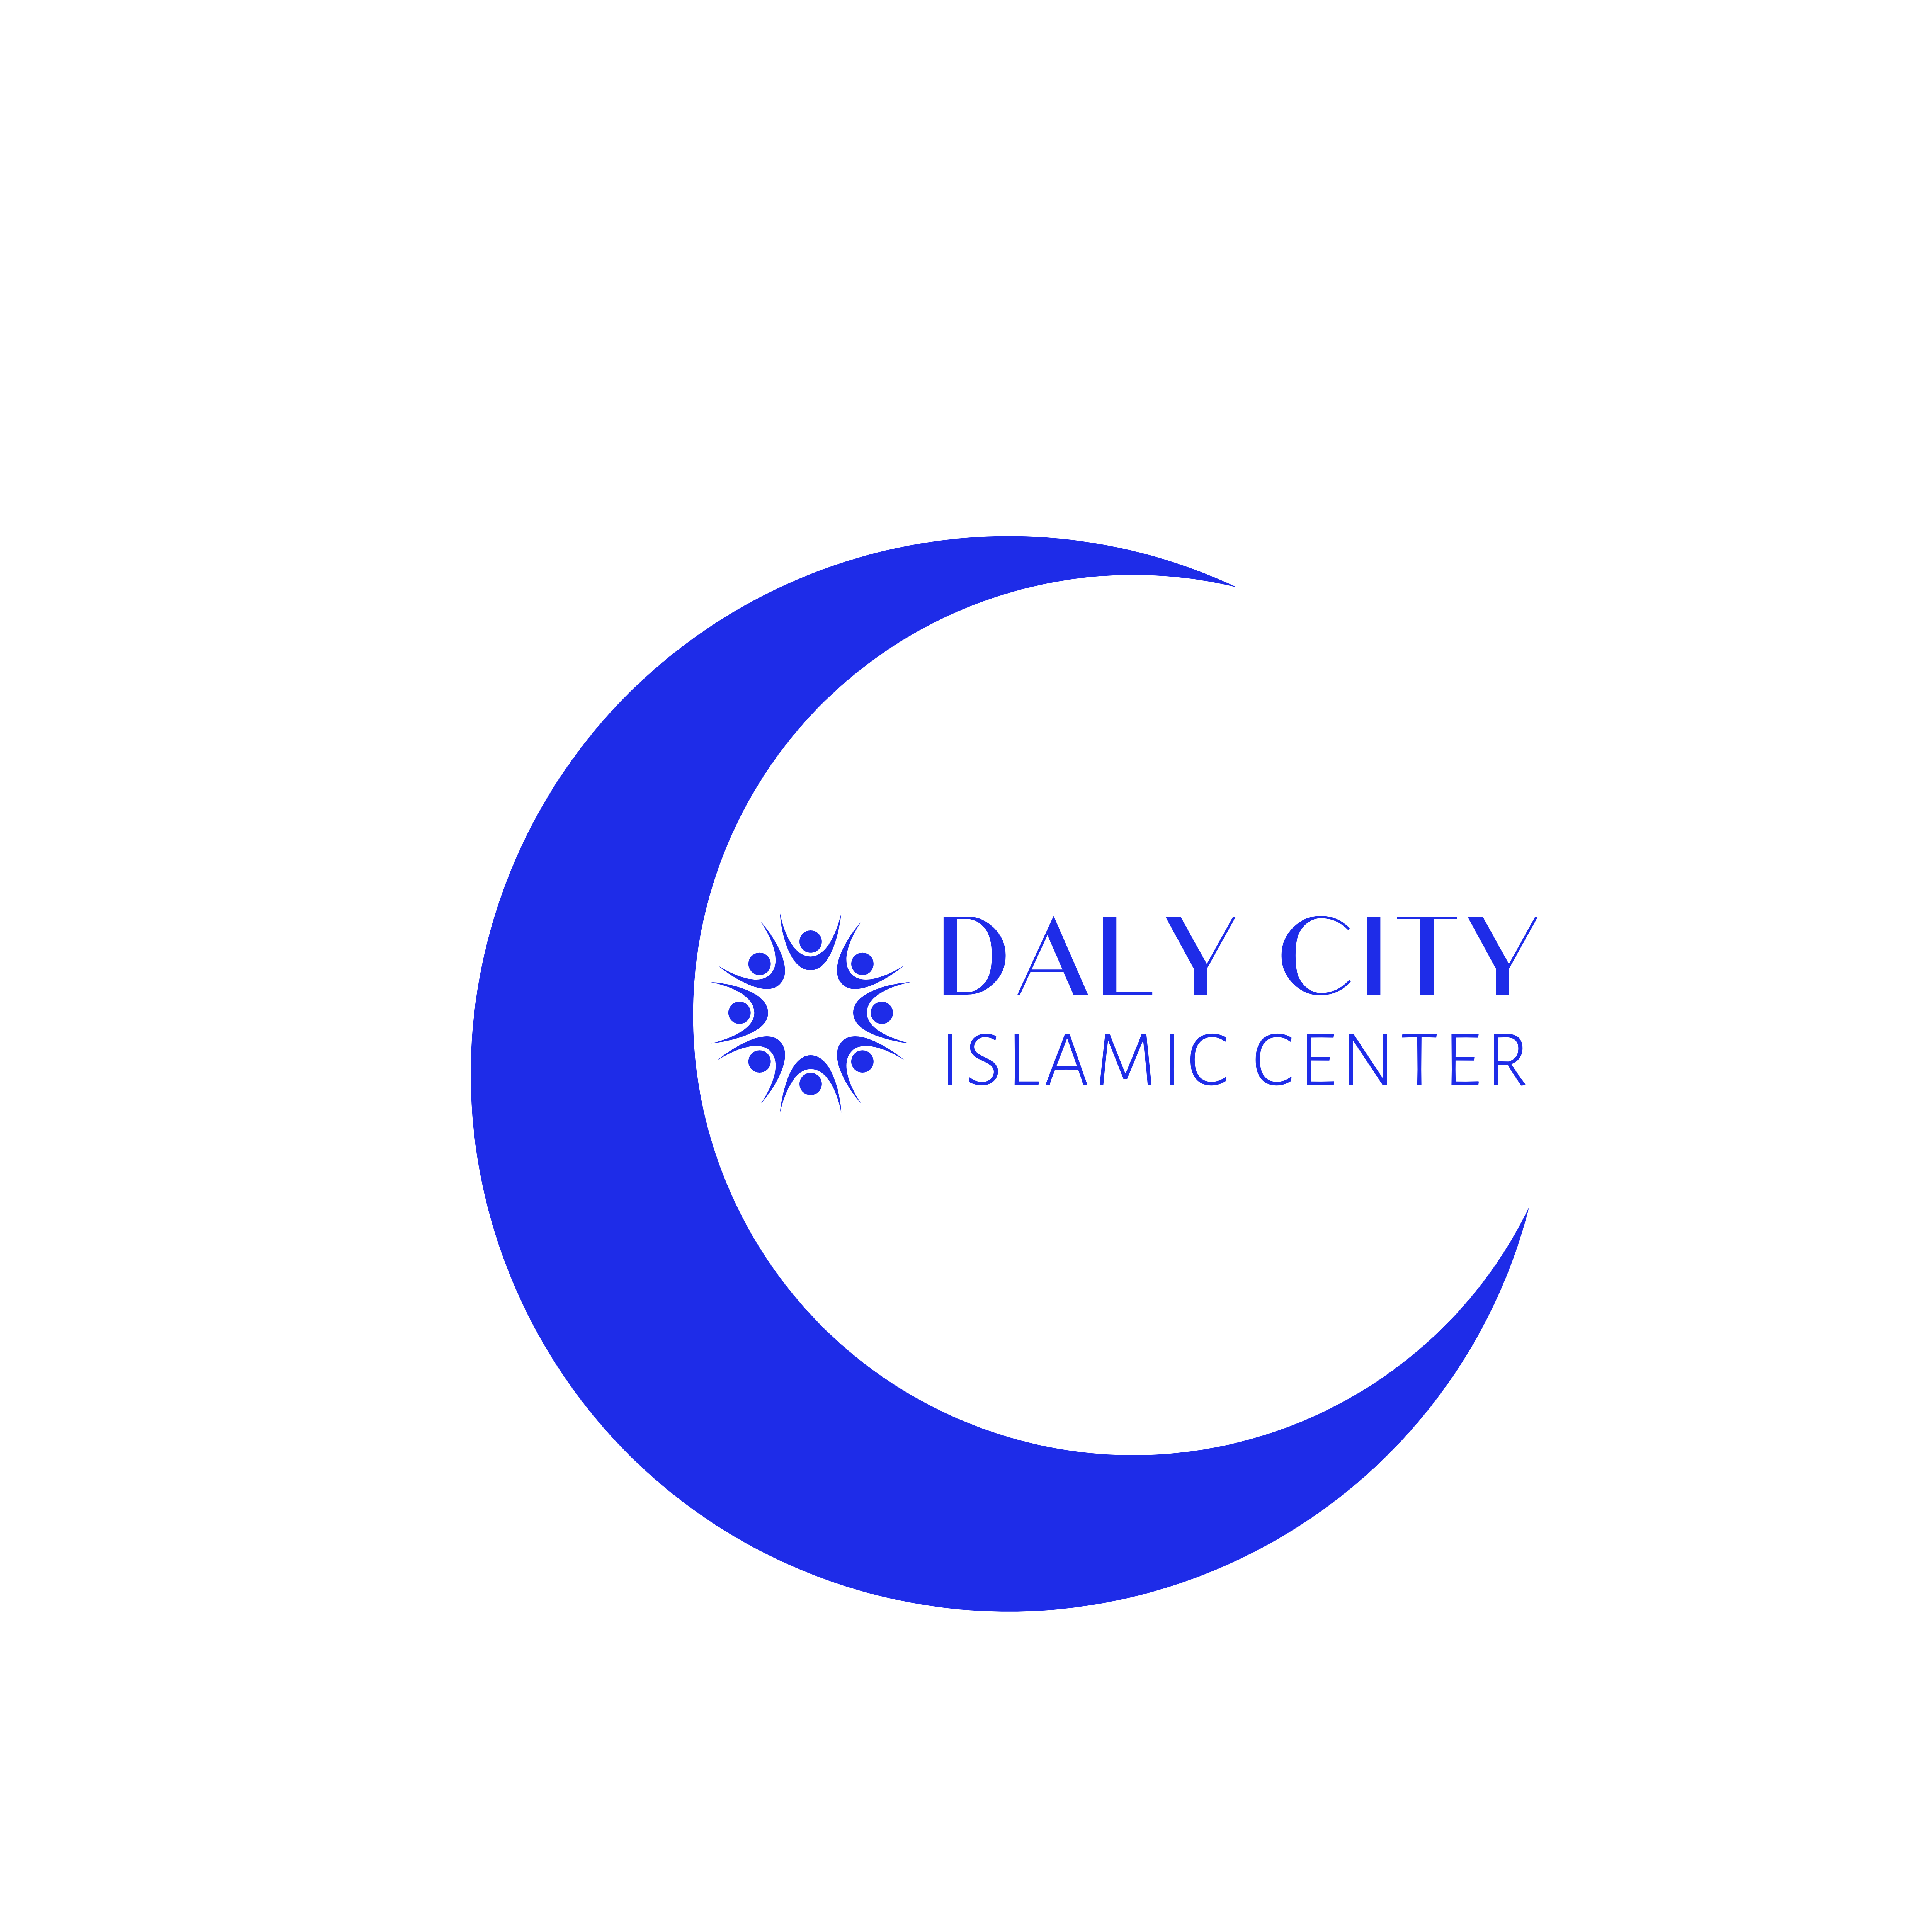 Daly City Islamic Center logo